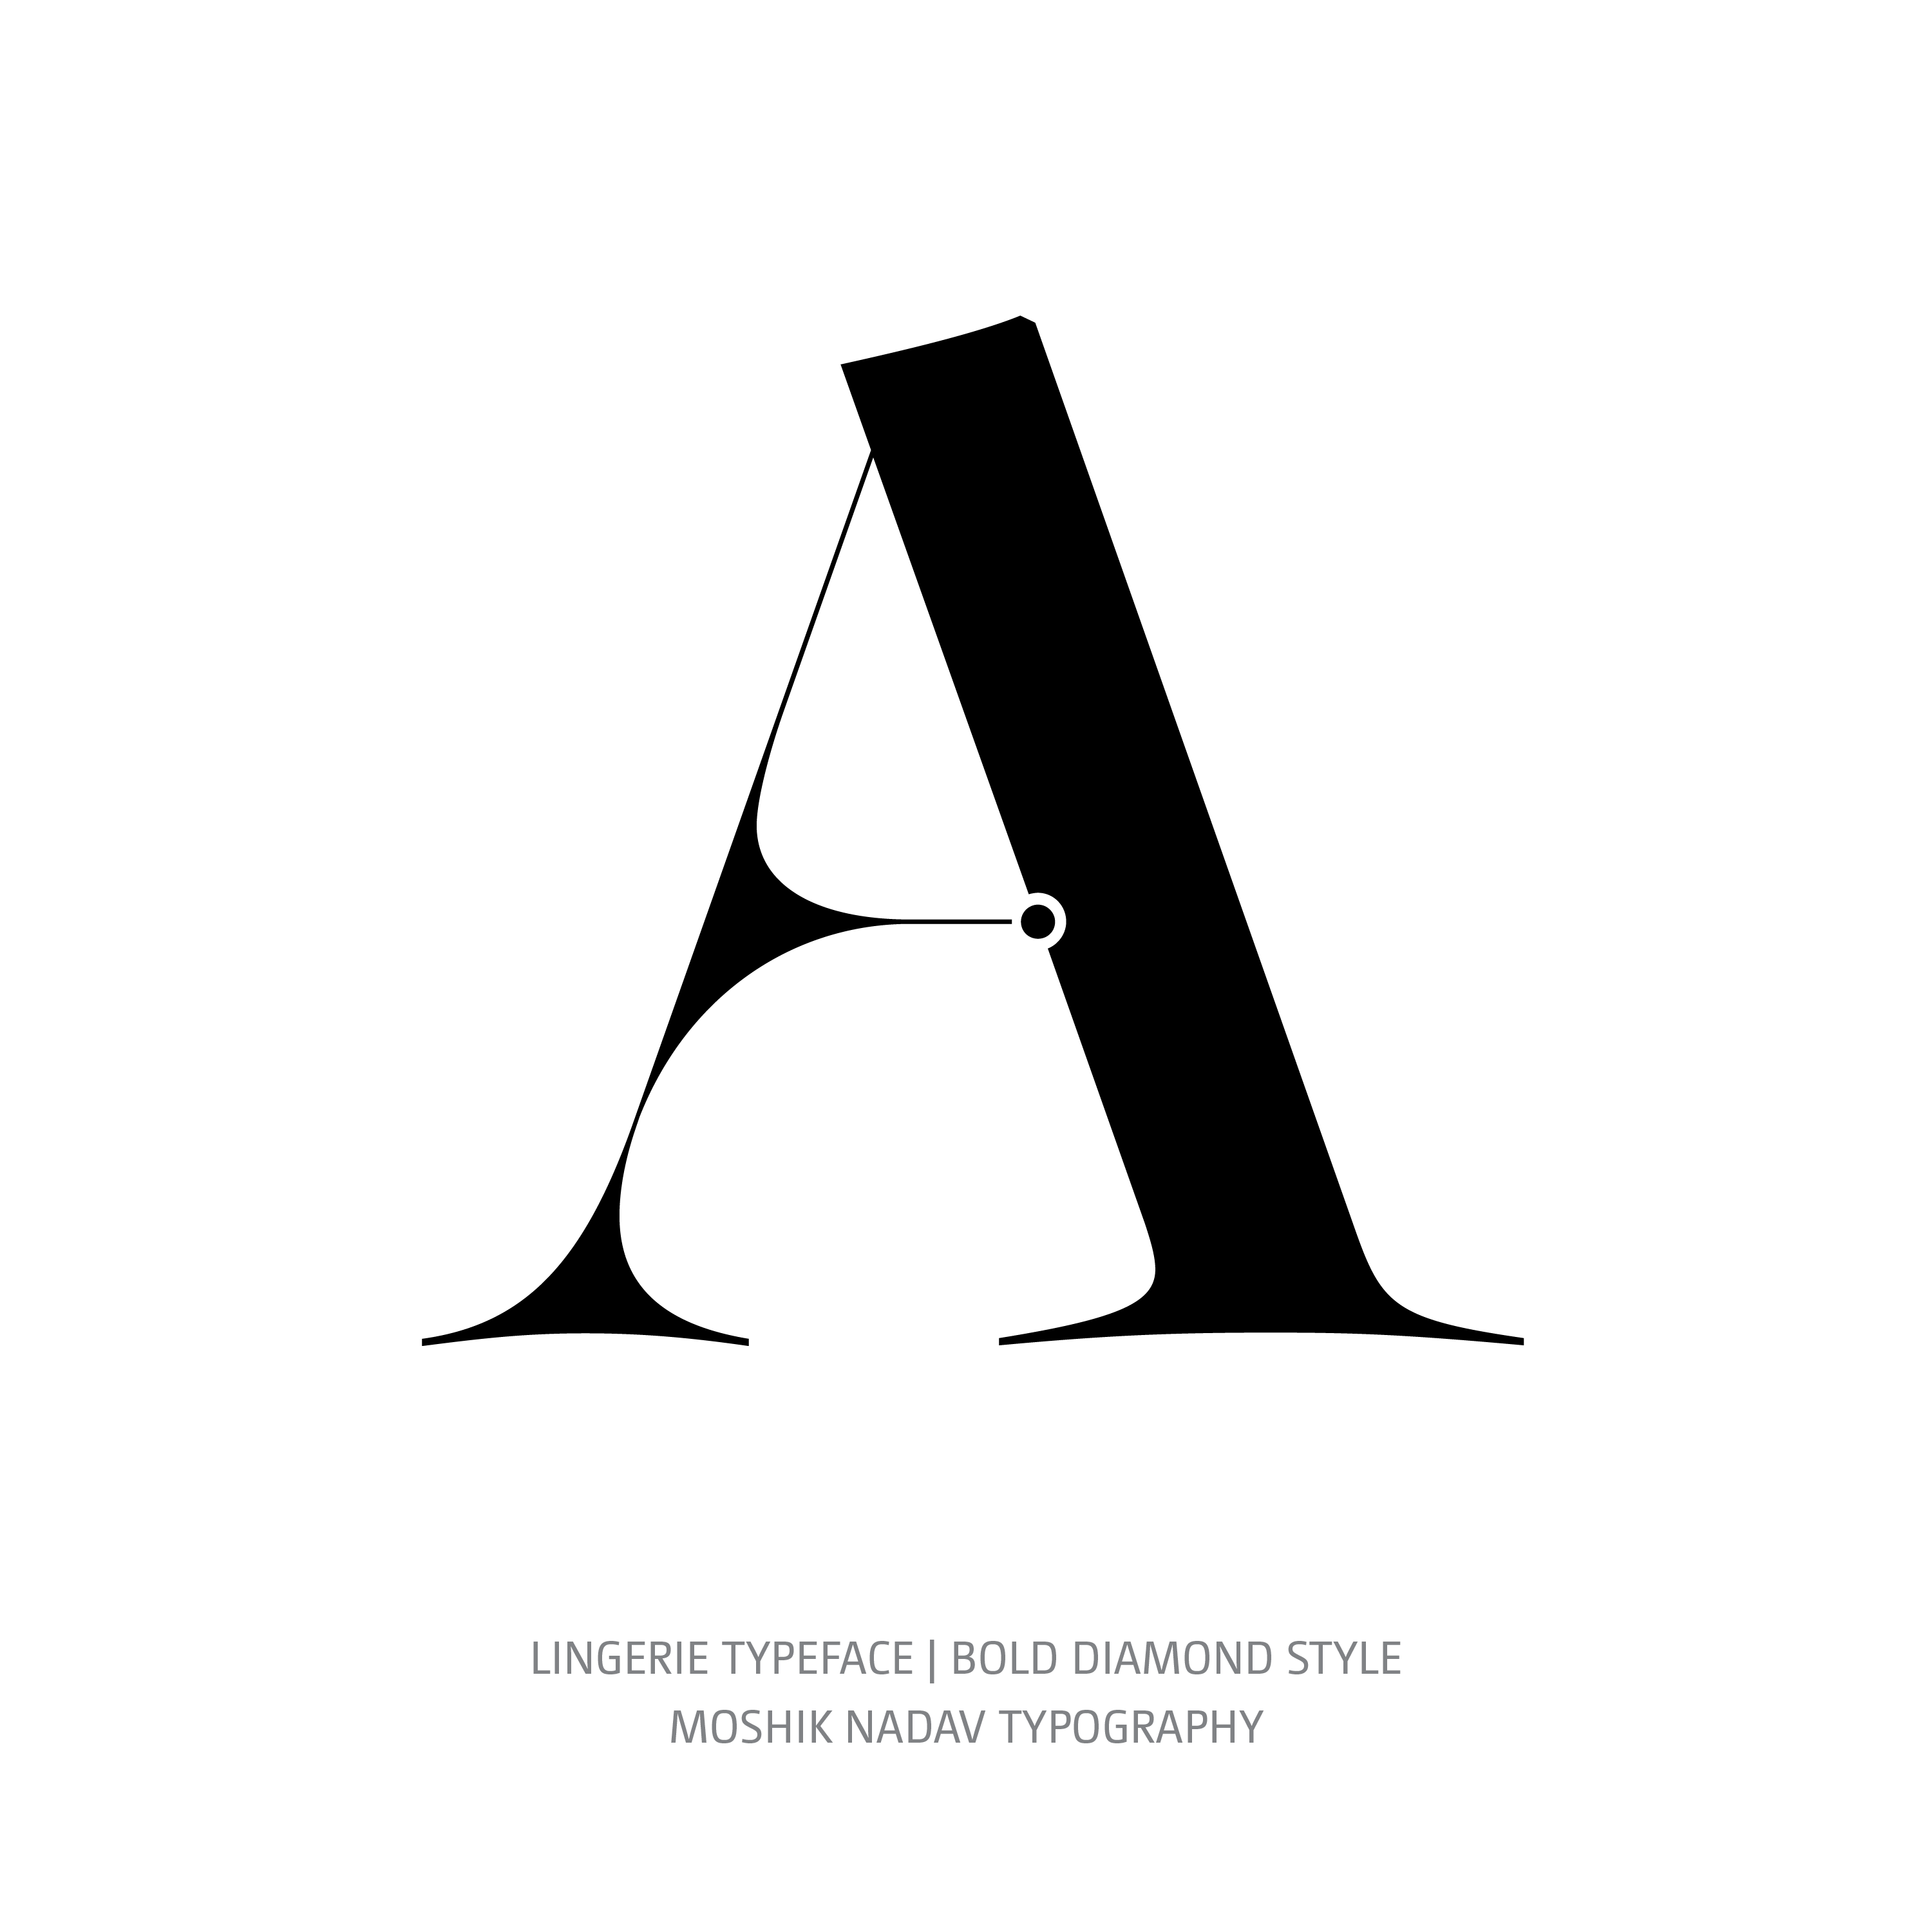 Lingerie Typeface Bold Diamond A